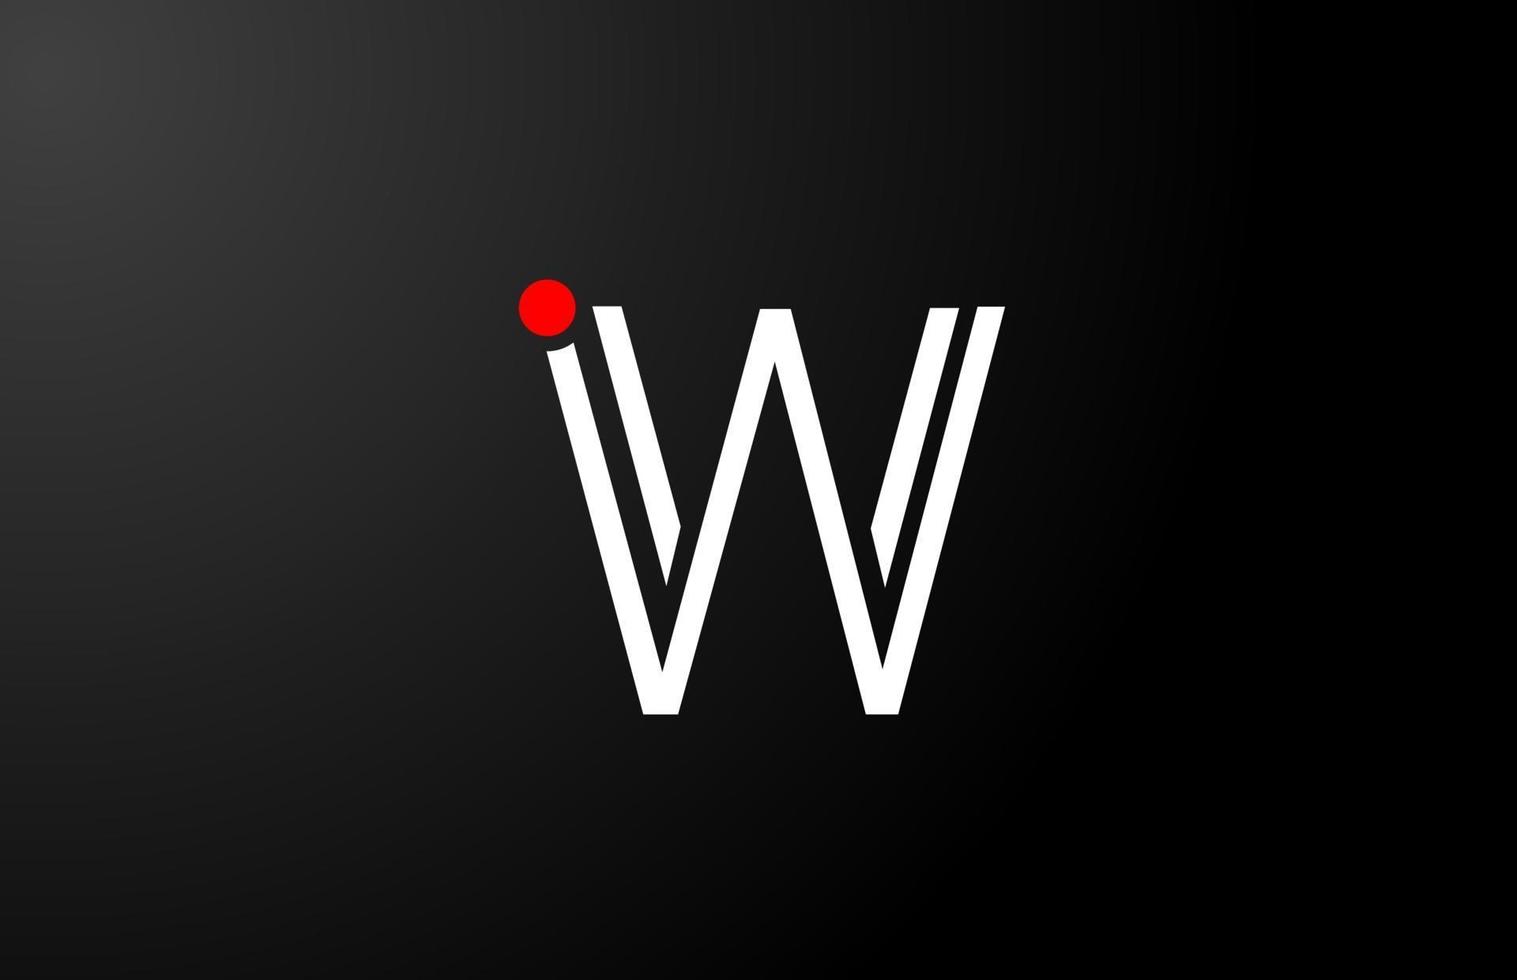 Design of line alphabet letter W in for company logo icon design vector